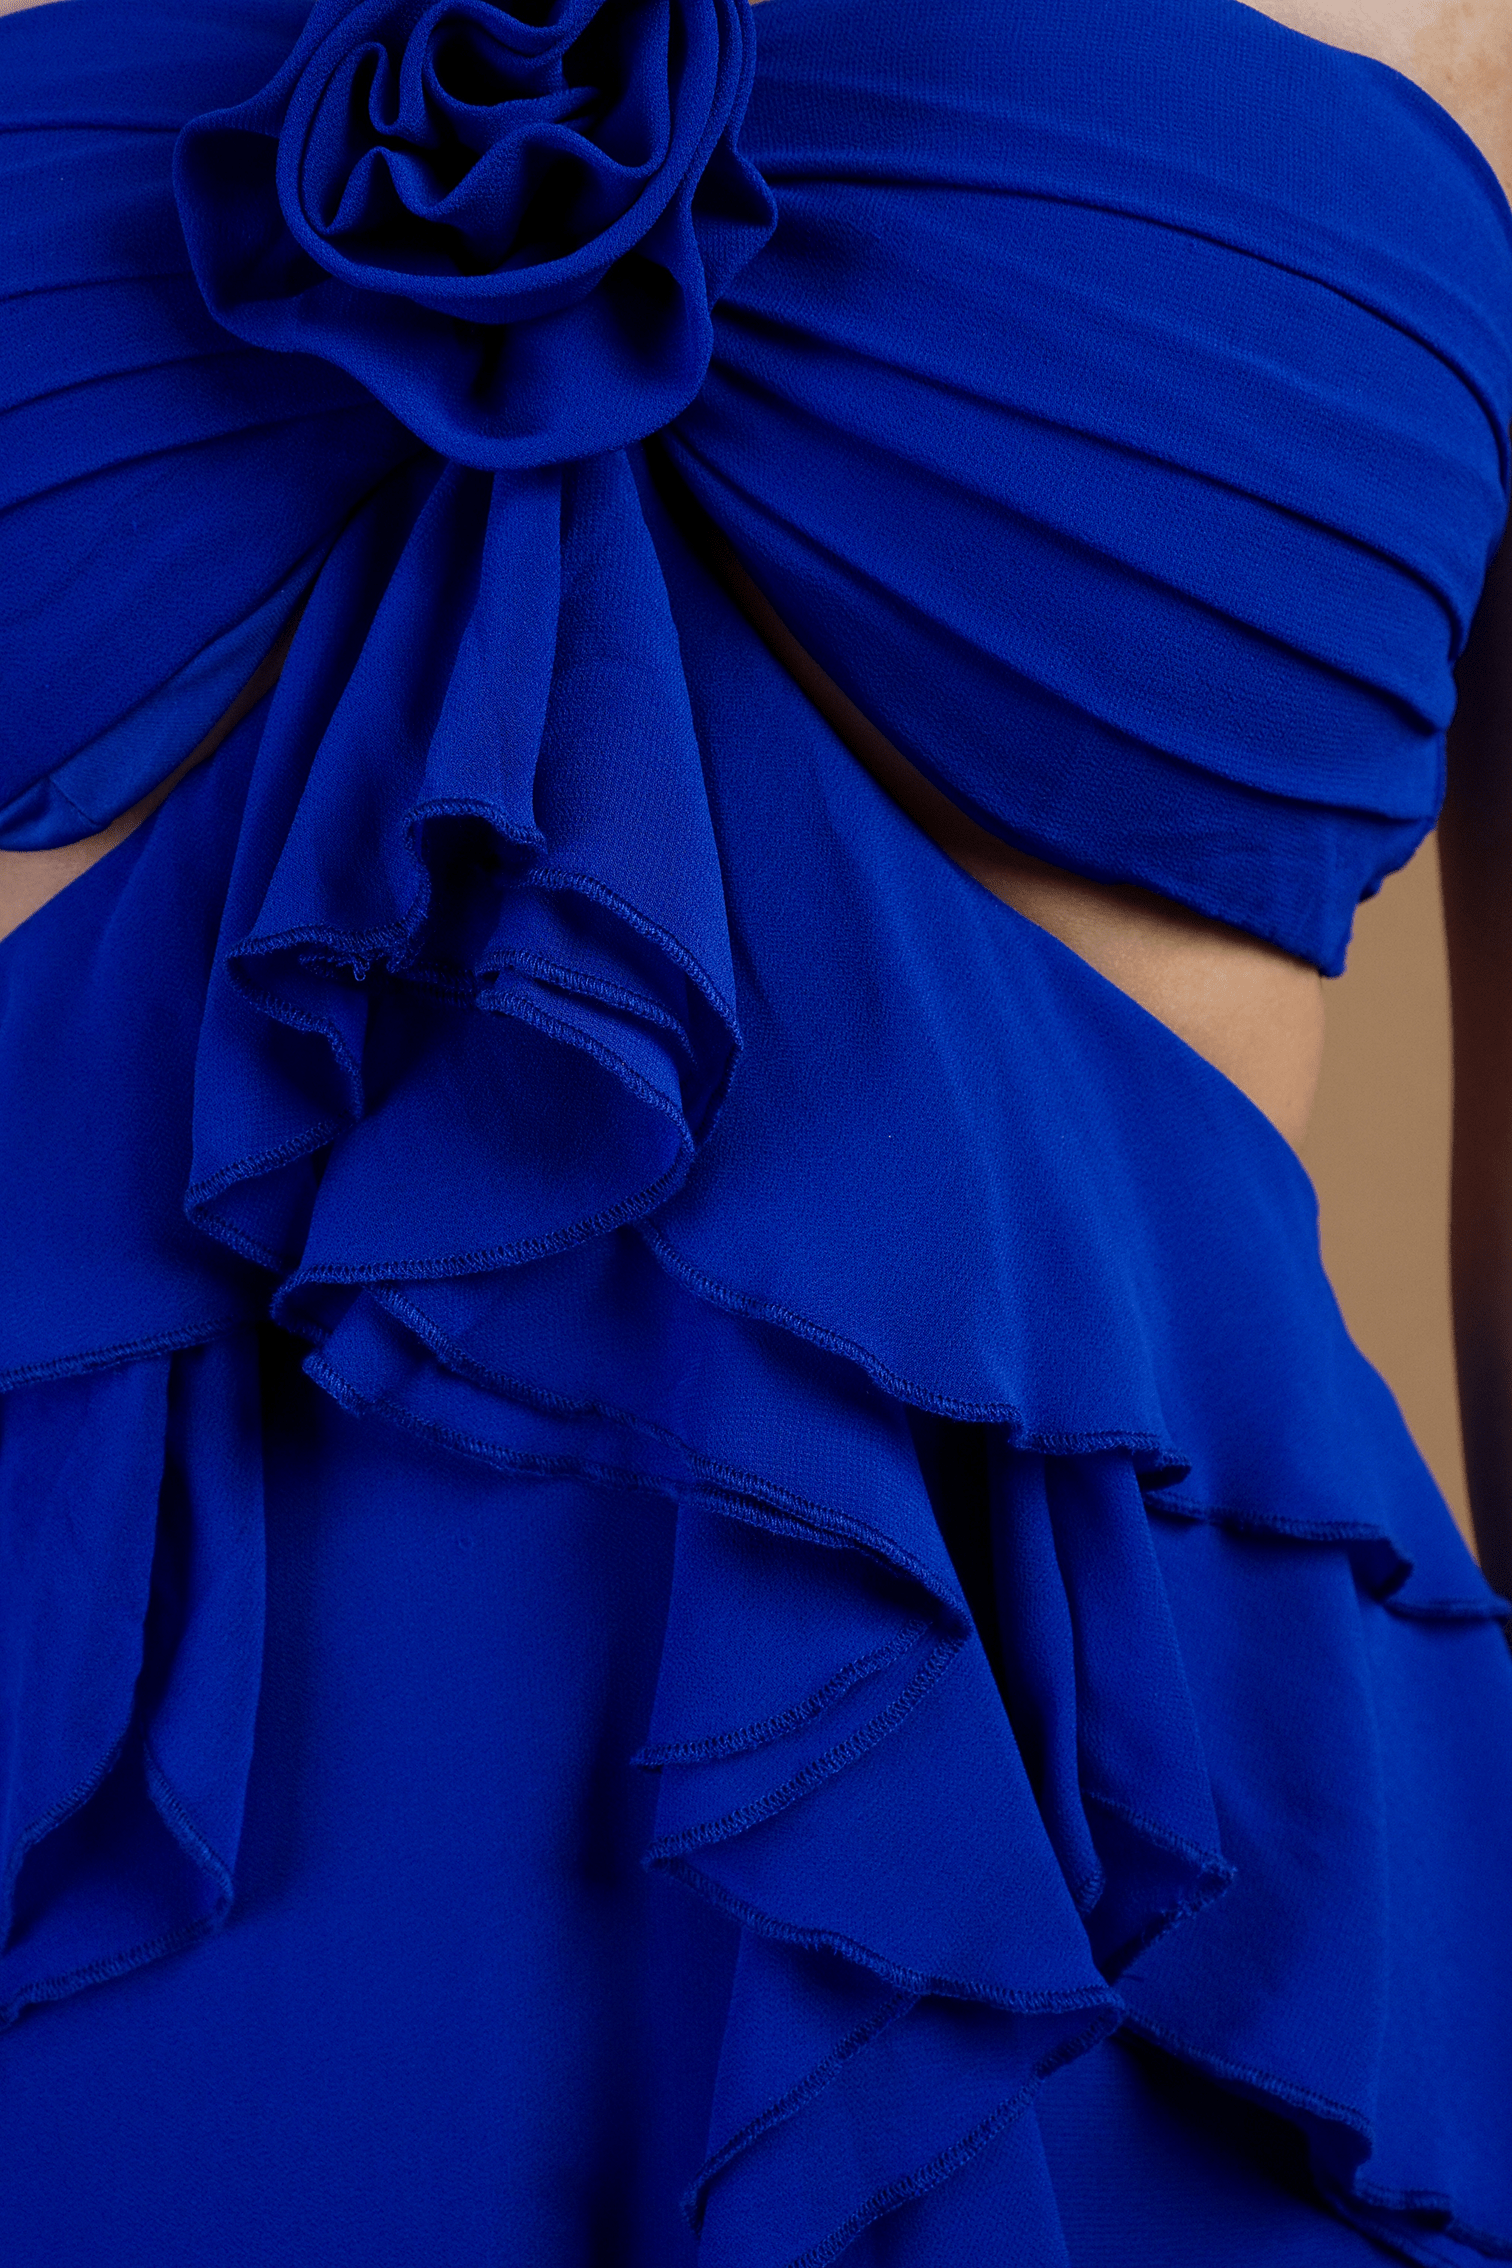 Chloe Dao Boutique DRESSES Royal Blue Halter Neck Opened Back Ruffled Dress